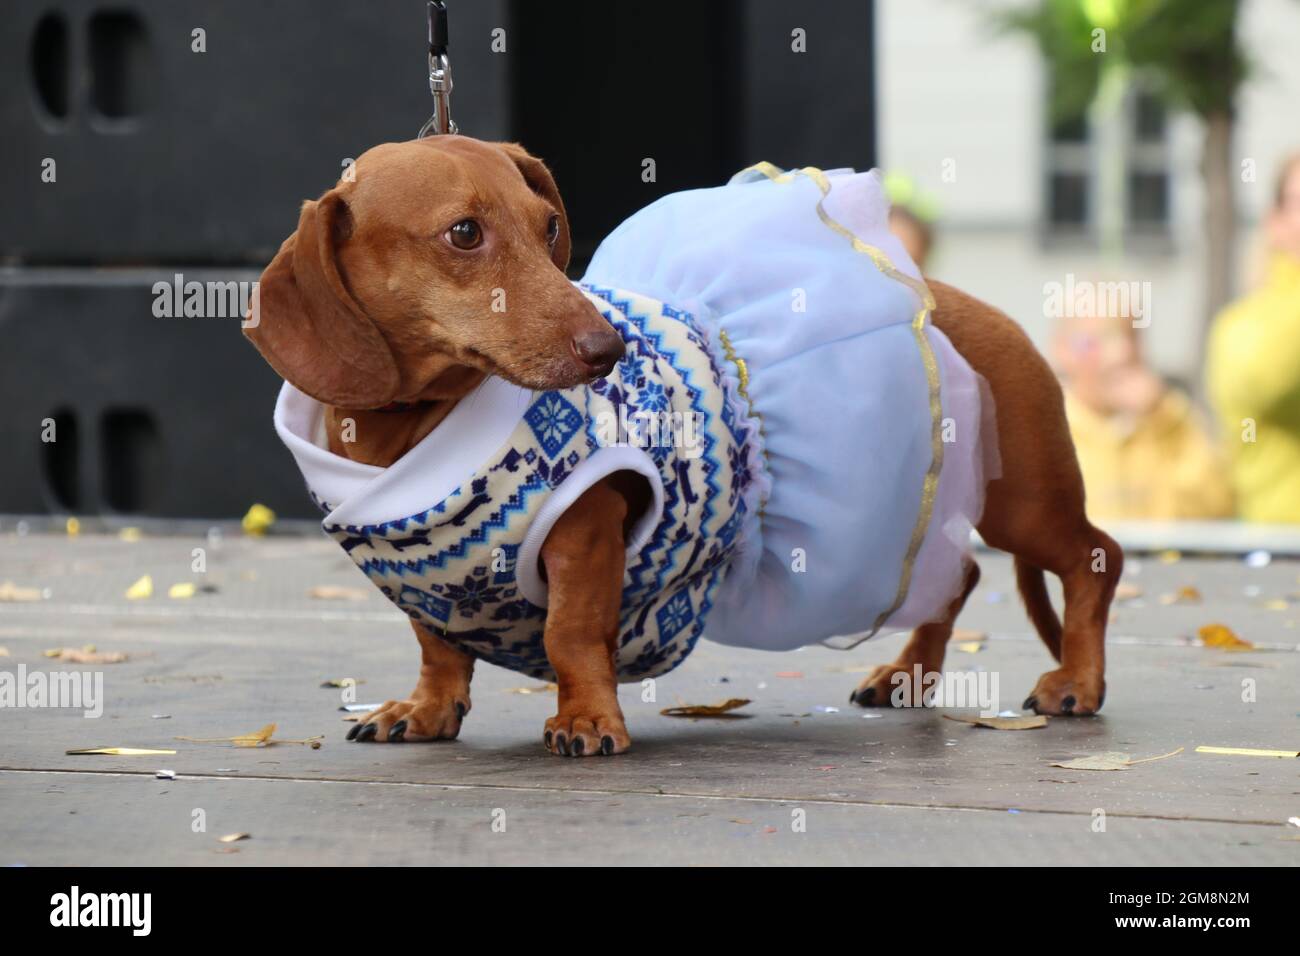 Tens Sauser Dog Fashion show dans le style Circus, St Petersburg, Russie Banque D'Images